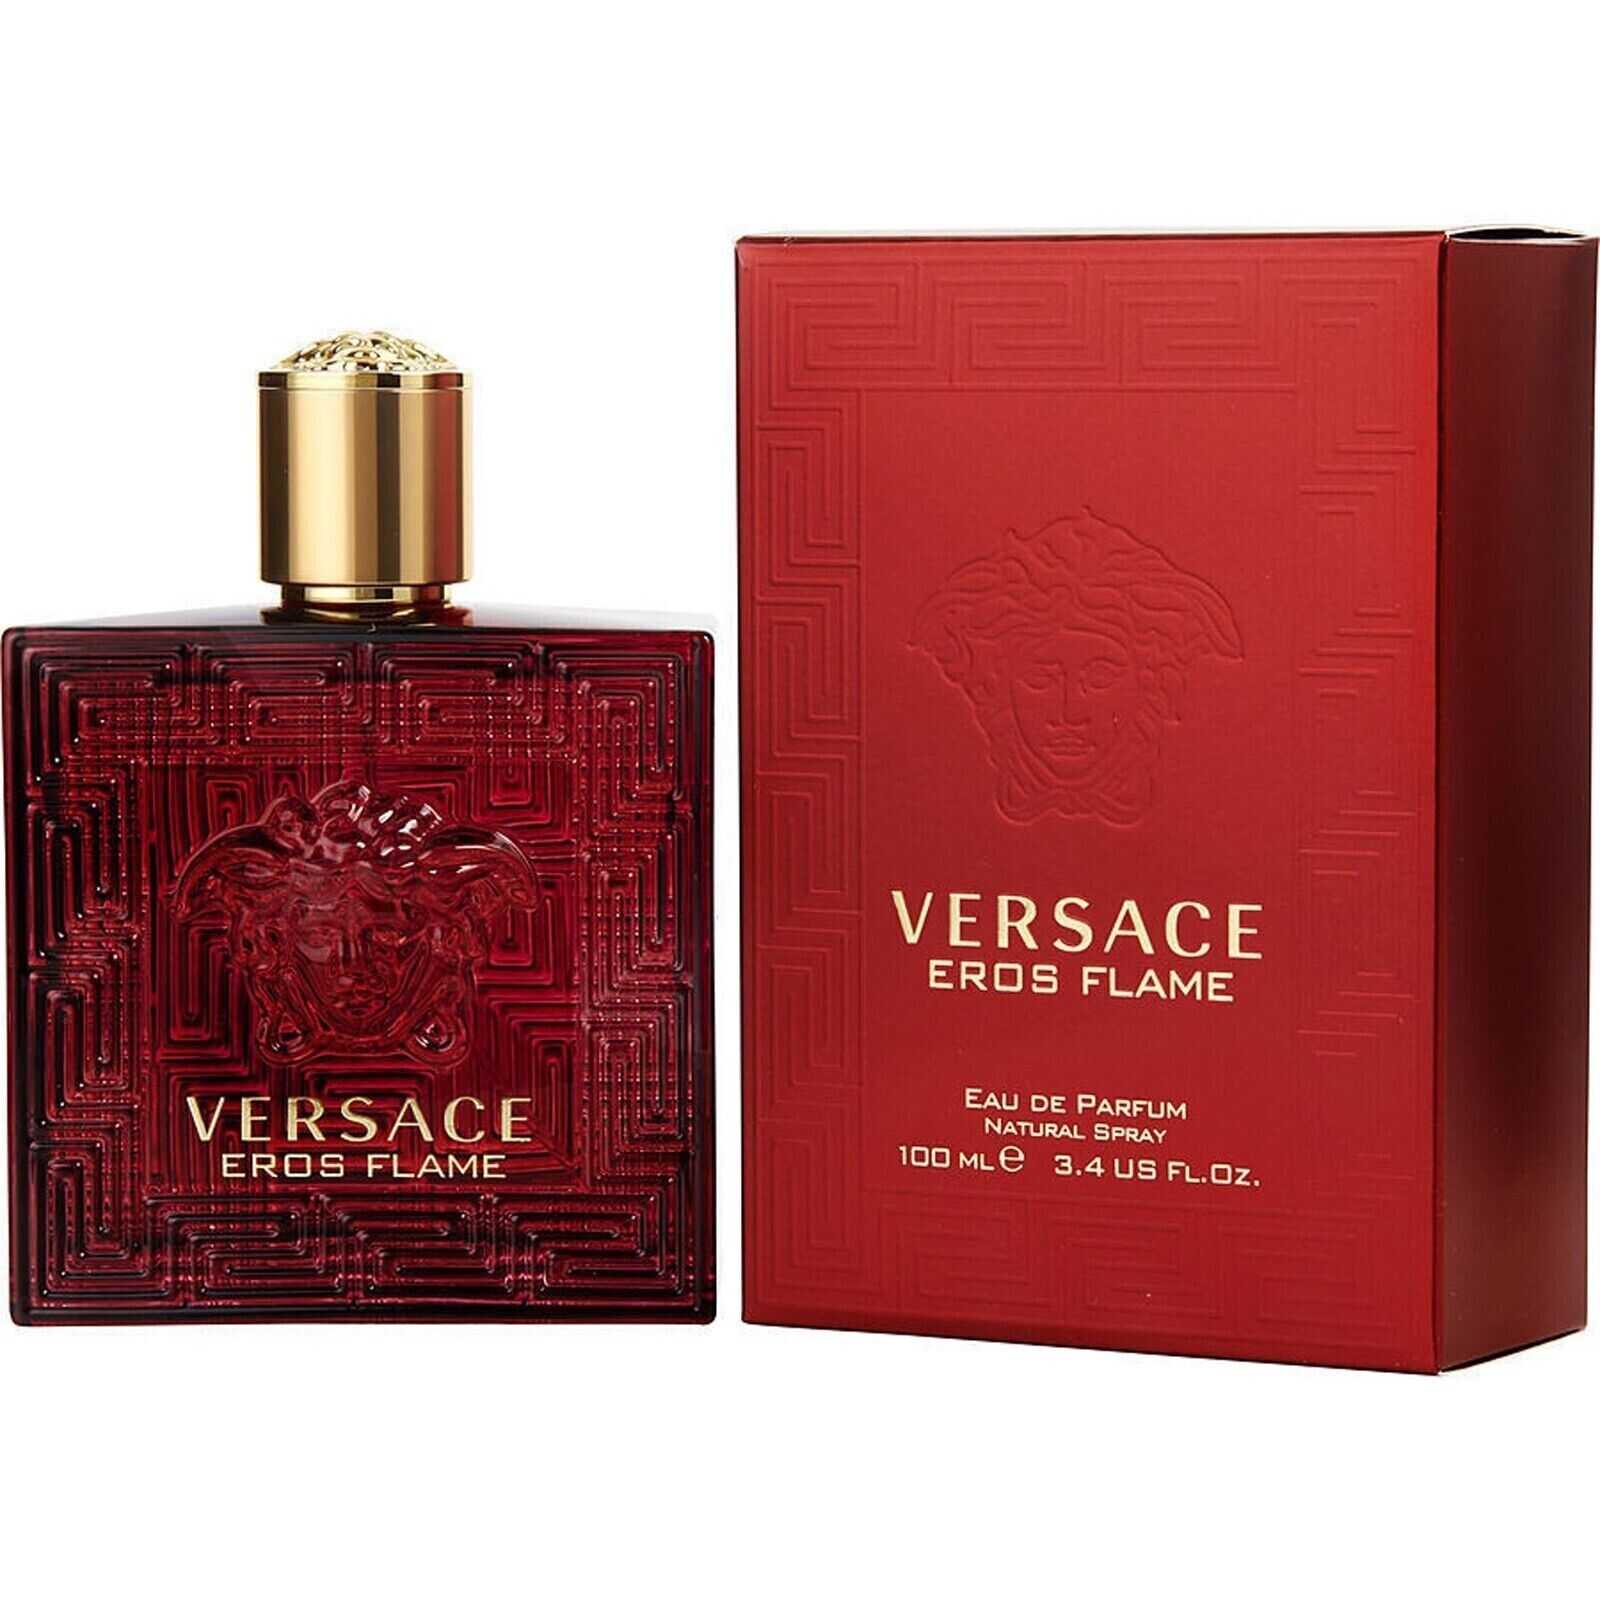 Versace Eros Flame Eau de Parfum Spray 3.4oz/100ML Cologne Fragrances for Men